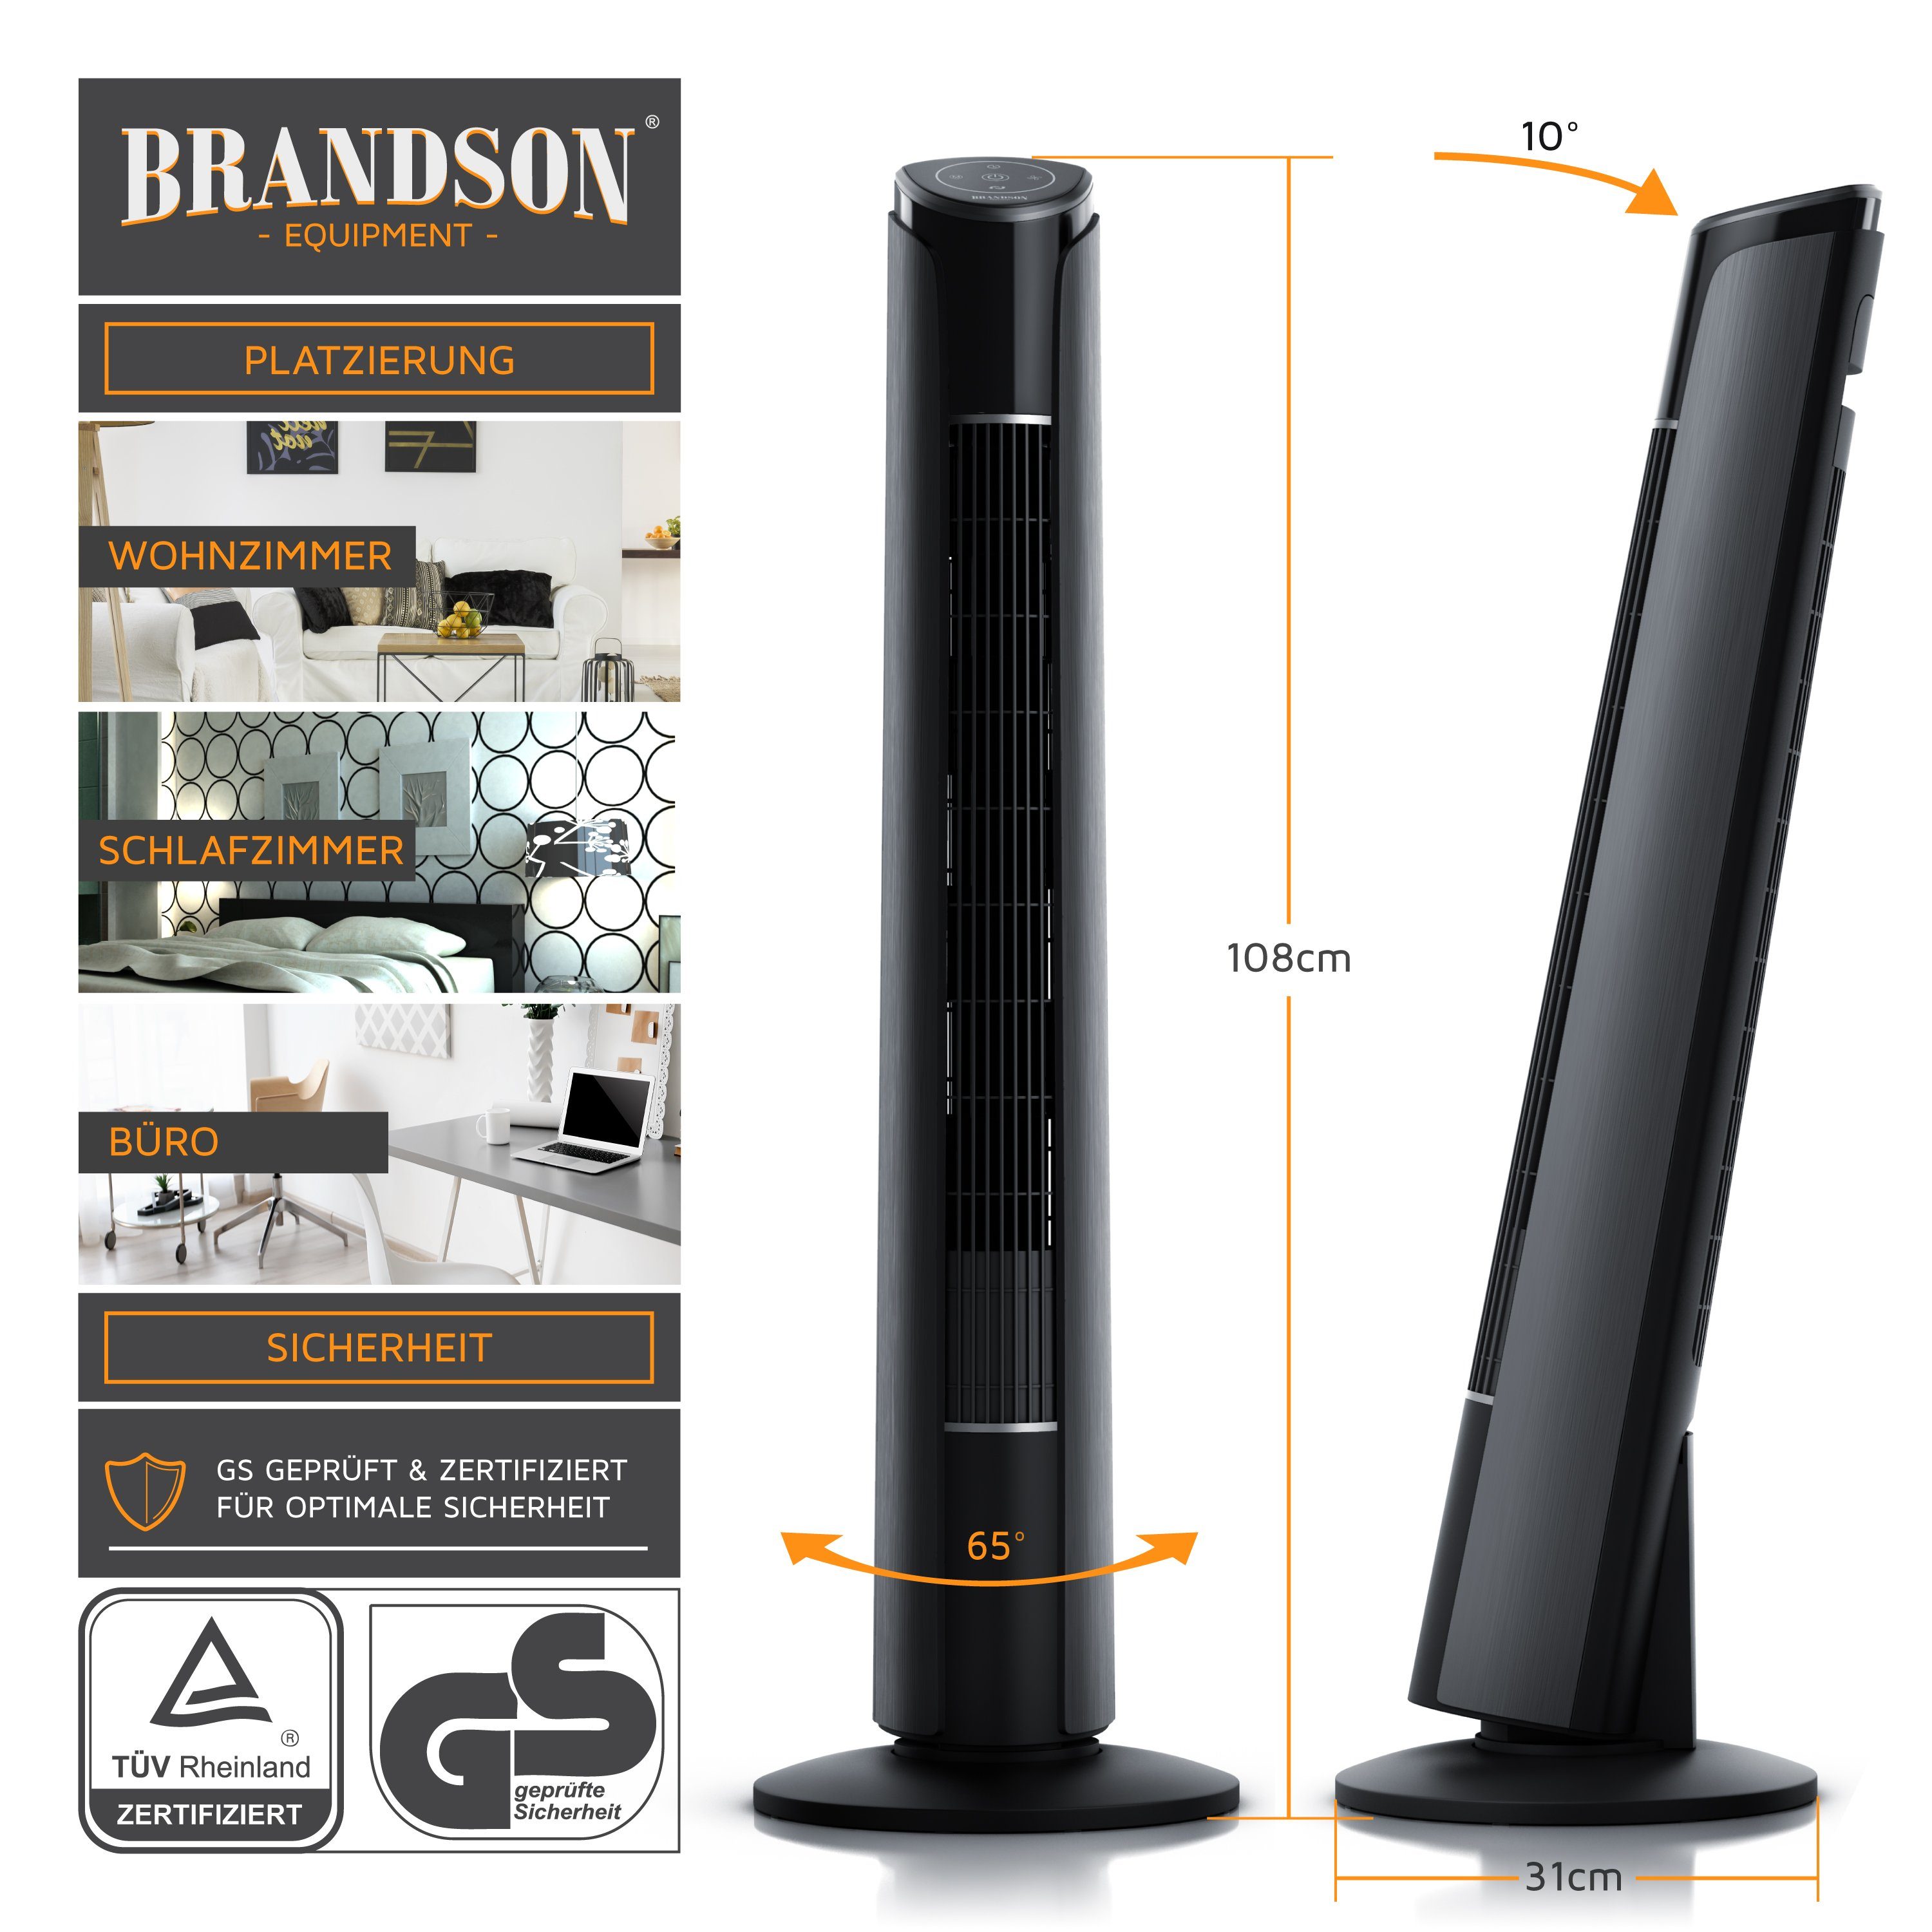 Brandson Turmventilator, Fernbedienung, 108cm 4 Standventilator grau neigbar, Oszillation, 10° Modi